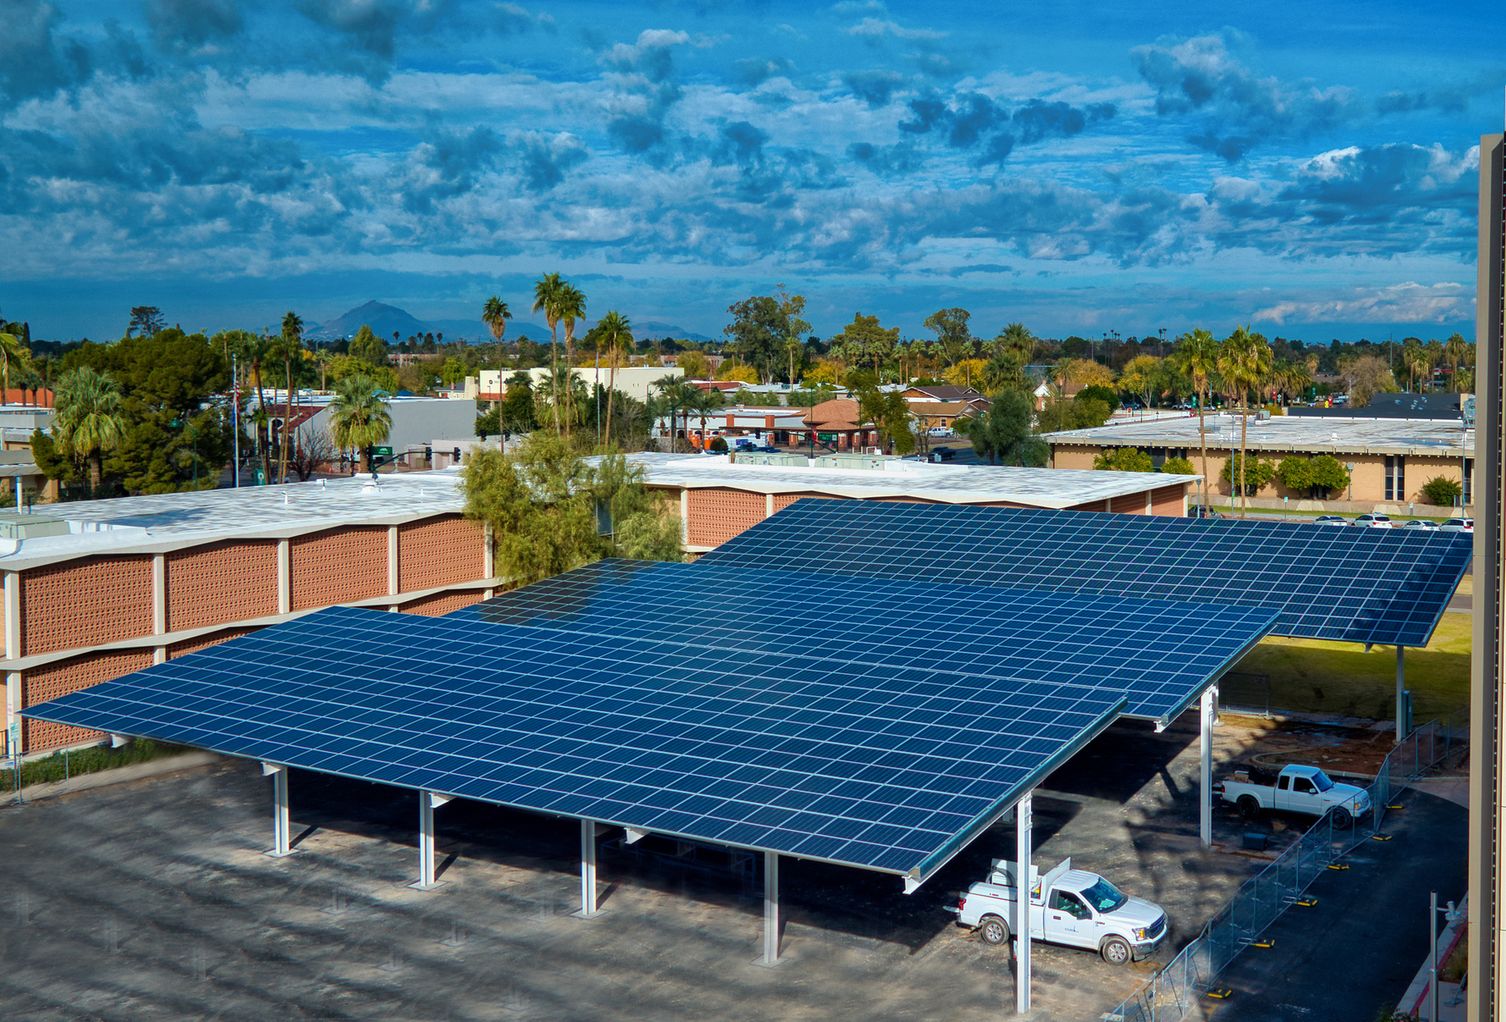 Solar panels on carport canopy in Arizona - Onyx Renewables